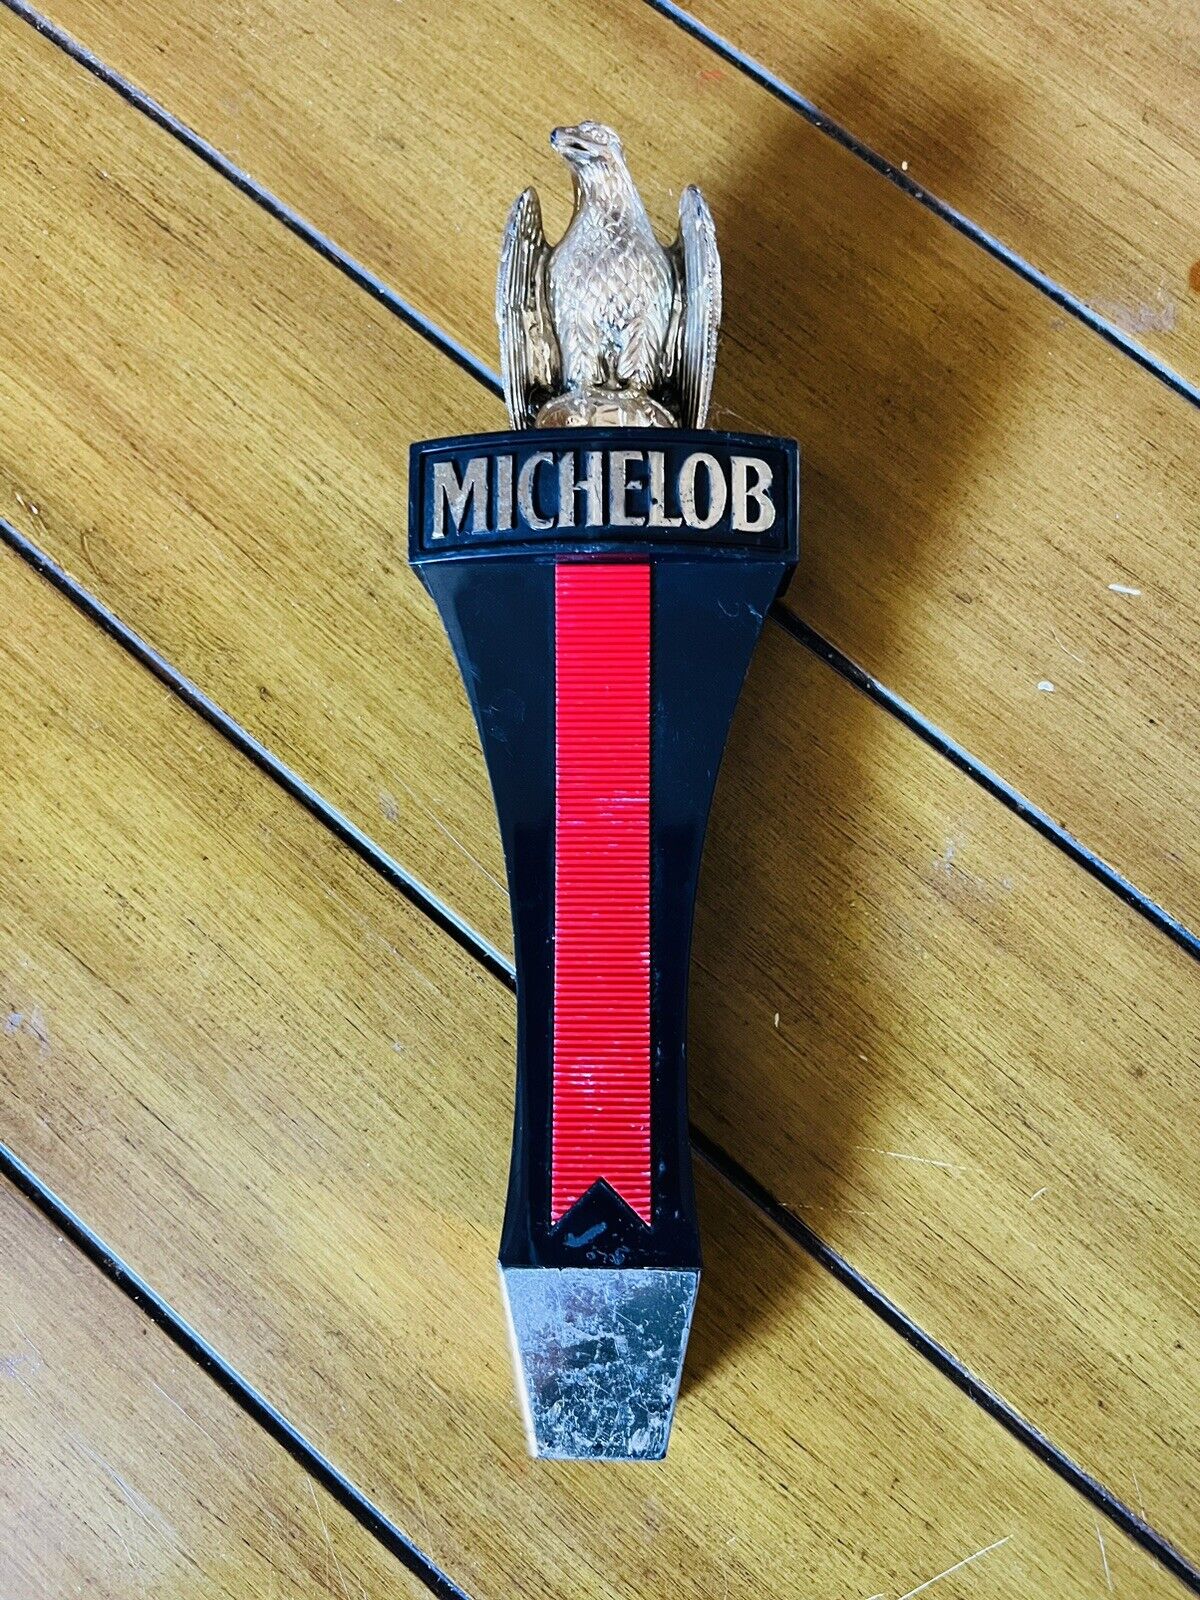 Vintage Anheuser Busch Michelob Beer Tap Handle